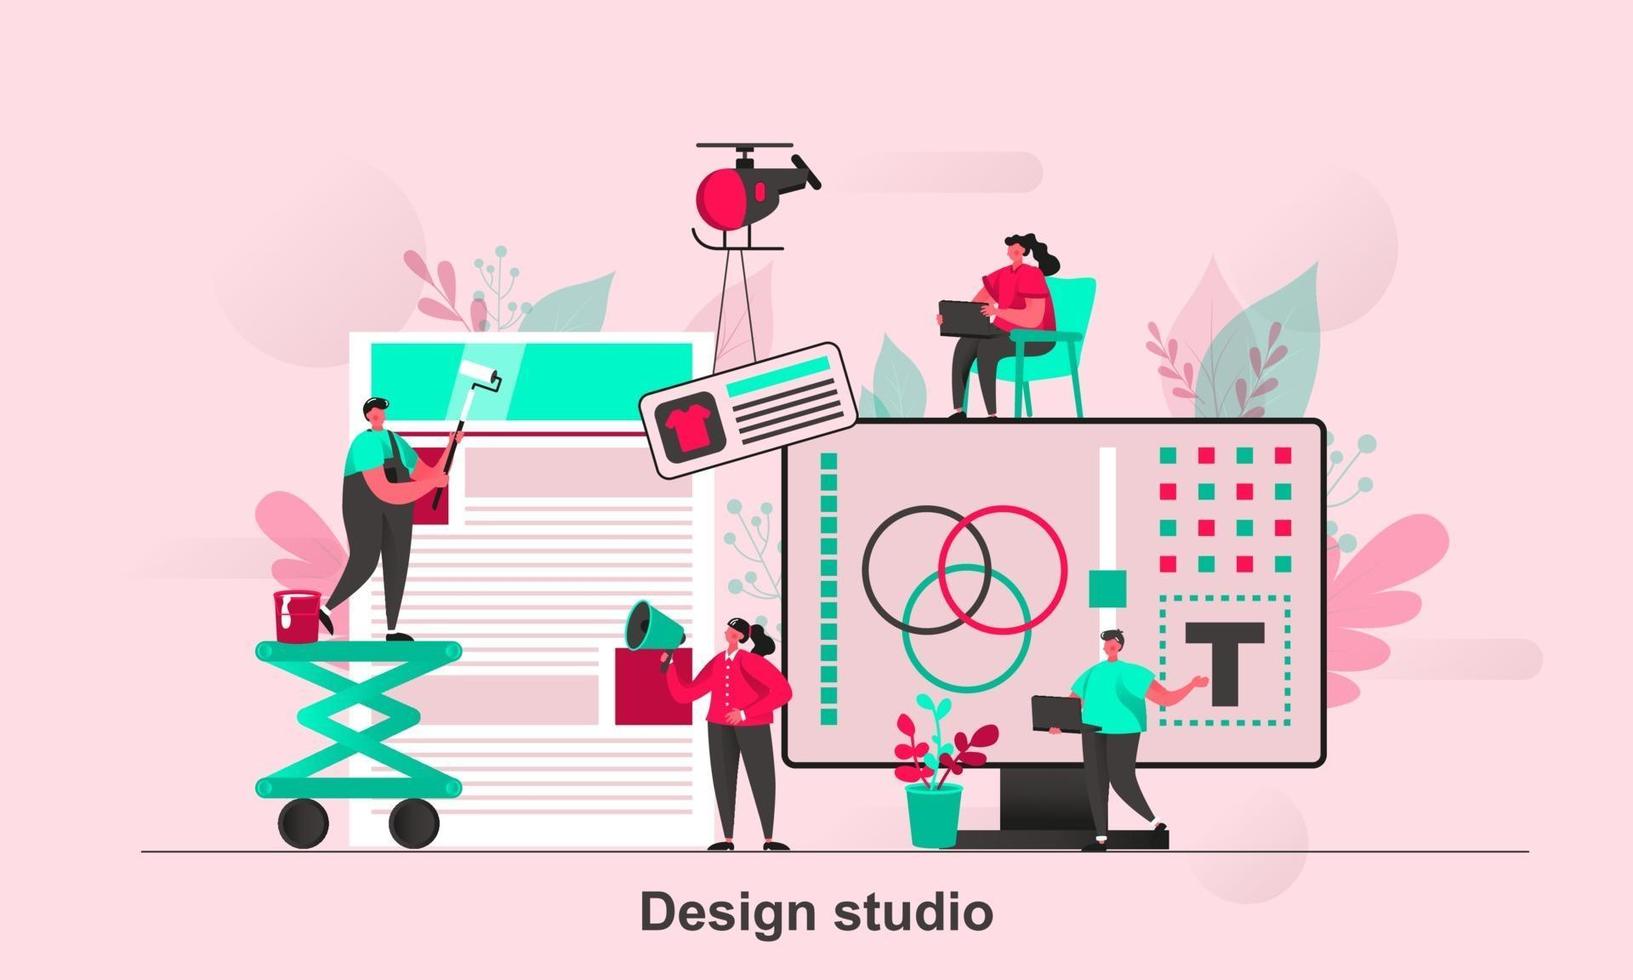 Digital Design and Creative Services media platform concept